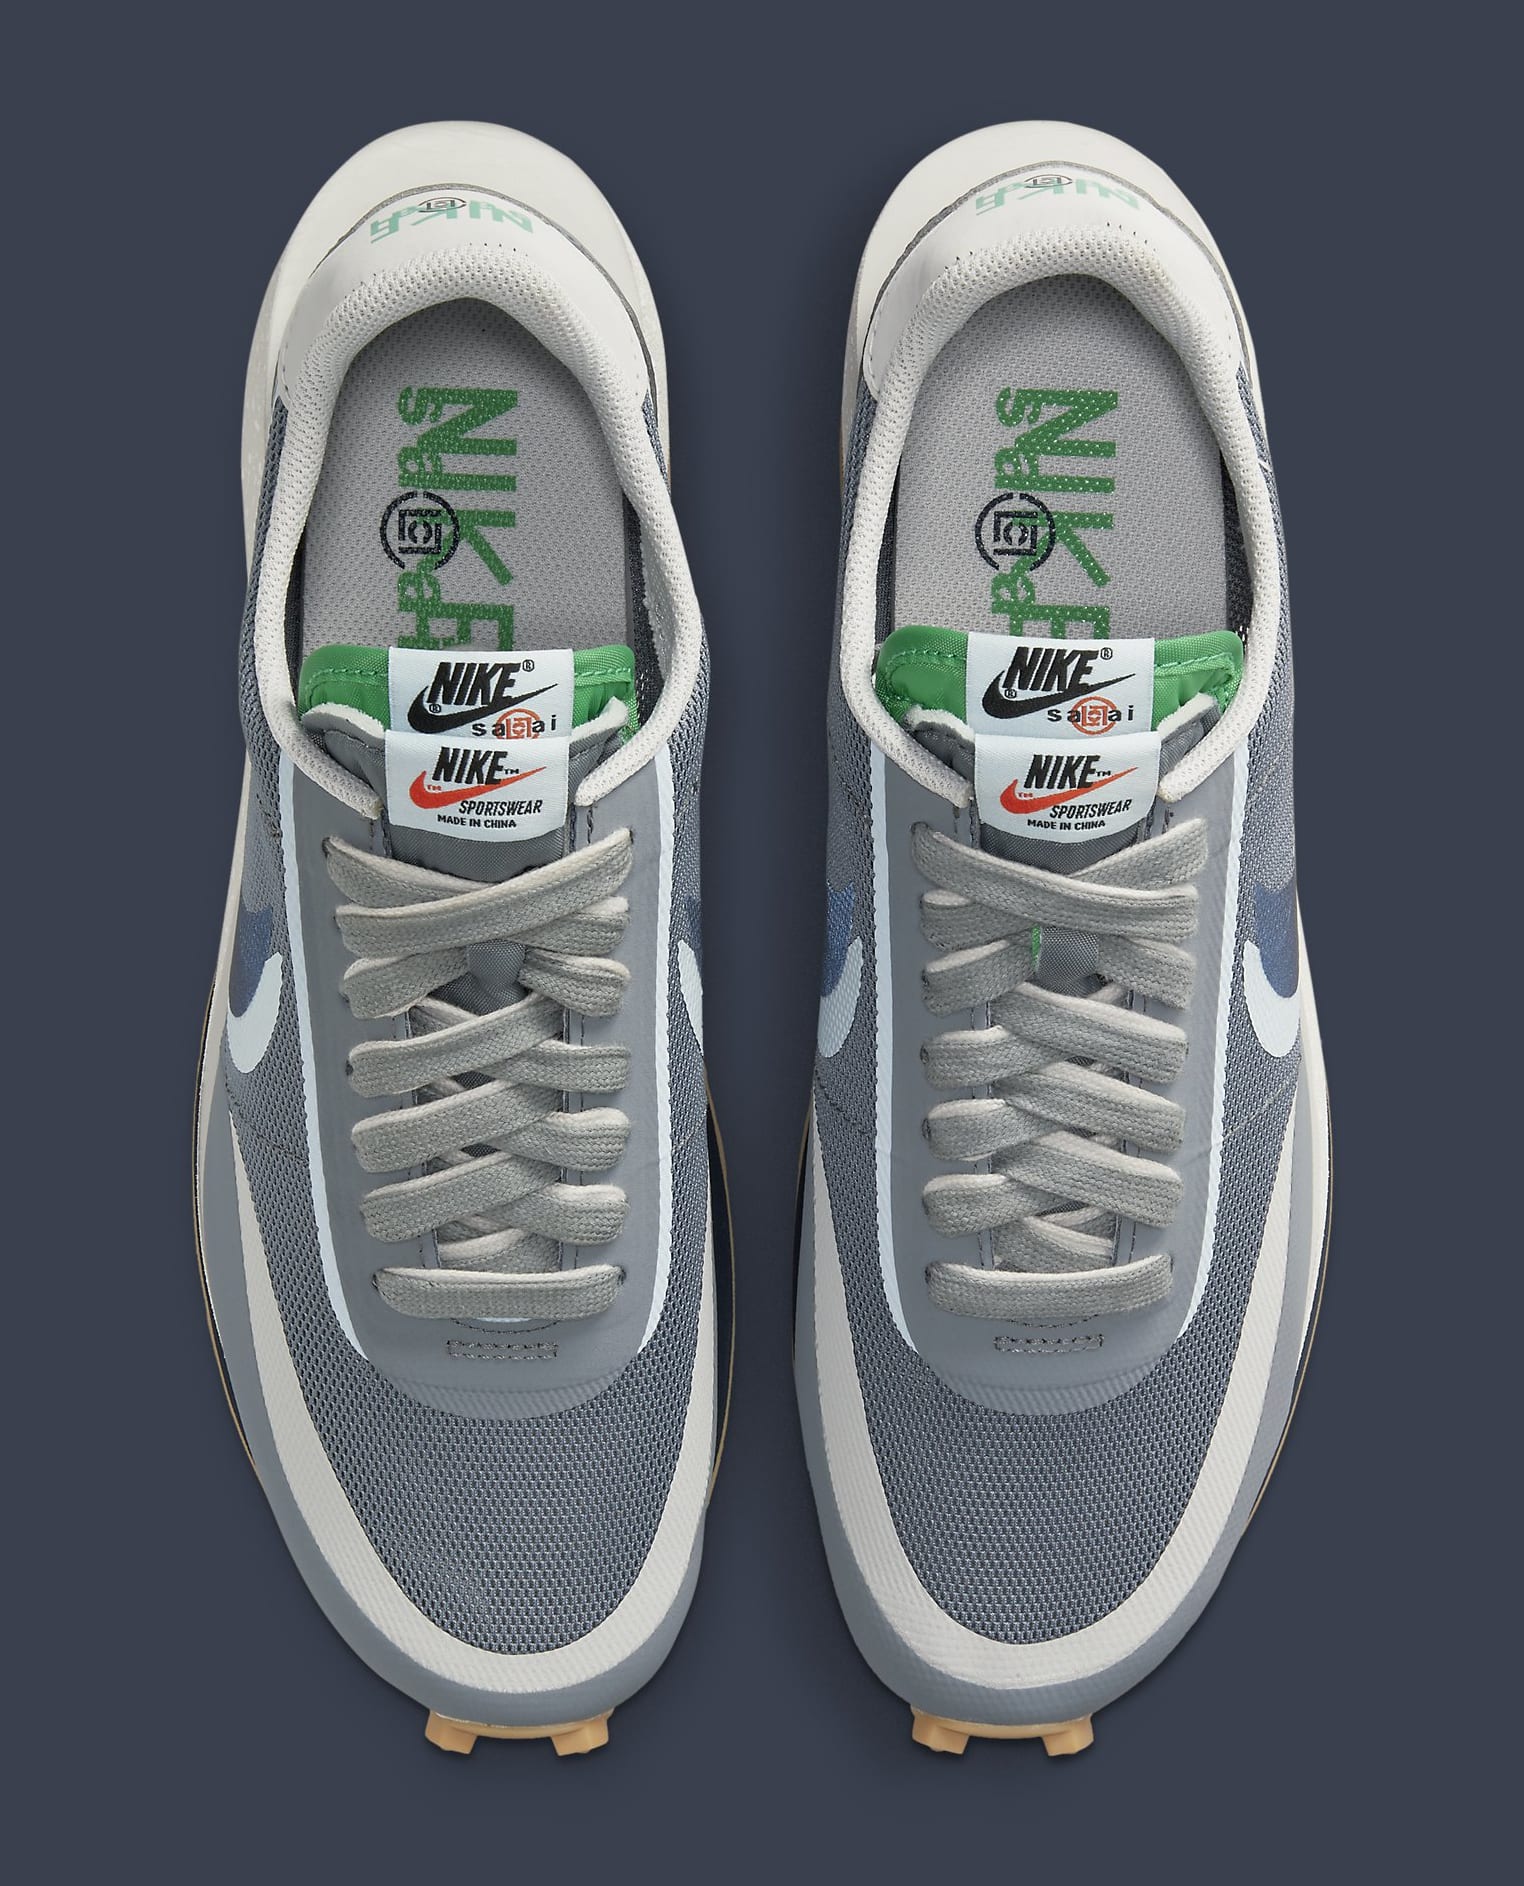 Clot x Sacai x Nike LDWaffle 'Cool Grey' Is Releasing on